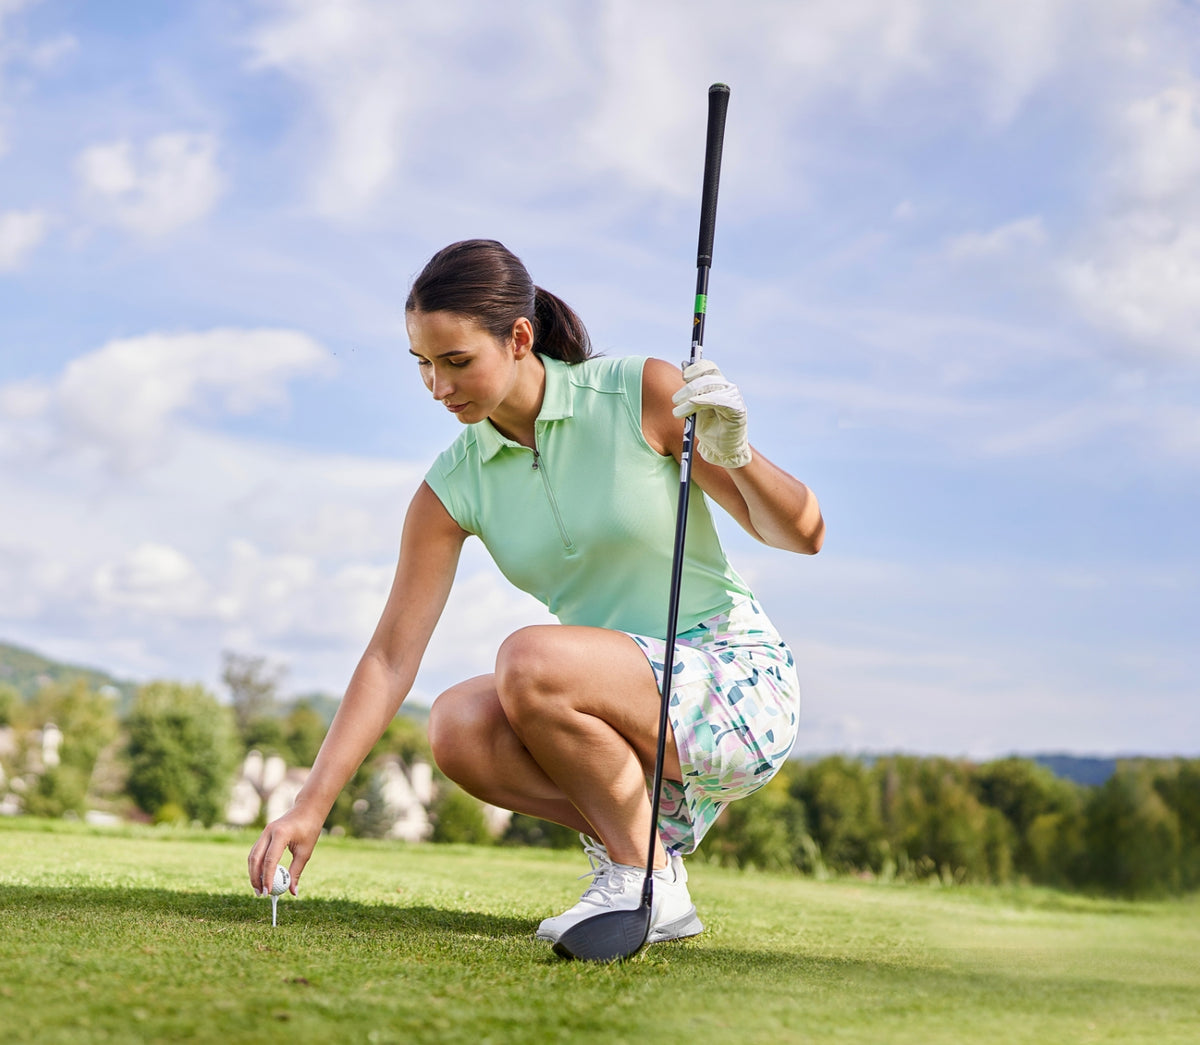 Men's Golf Clothing Accessories, Belts, Socks & More